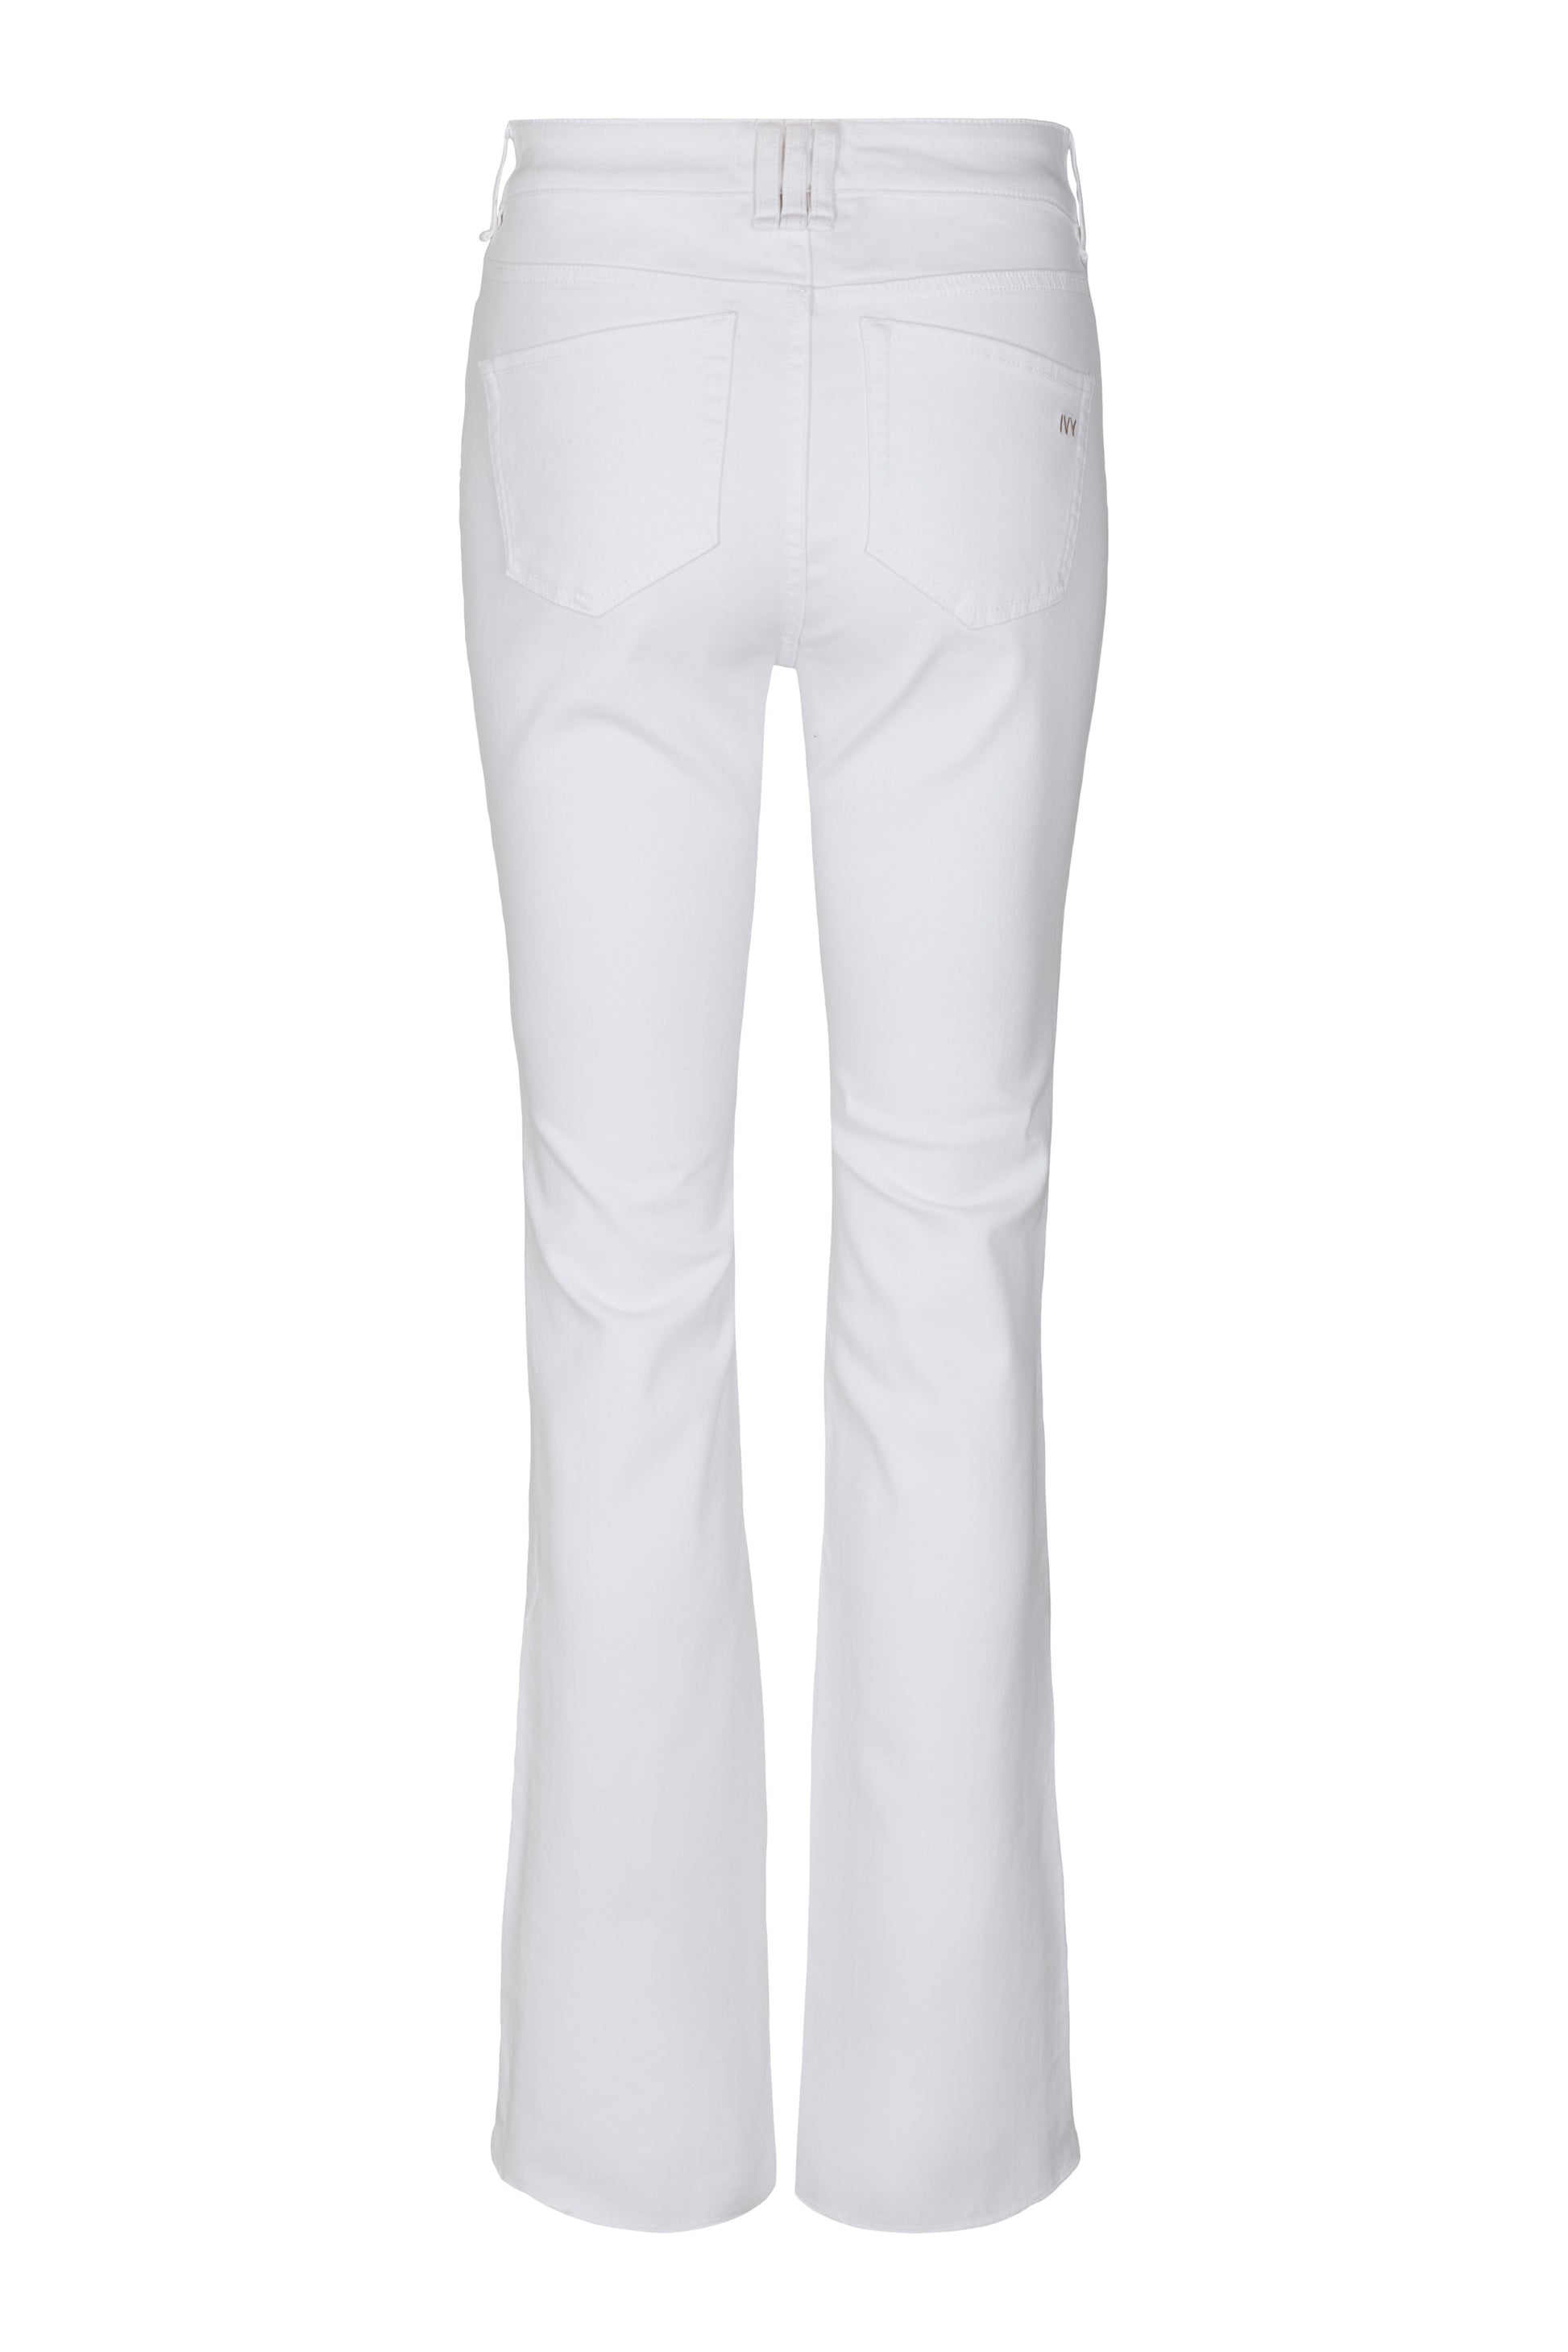 IVY Copenhagen IVY-Tara Jeans White Jeans & Pants